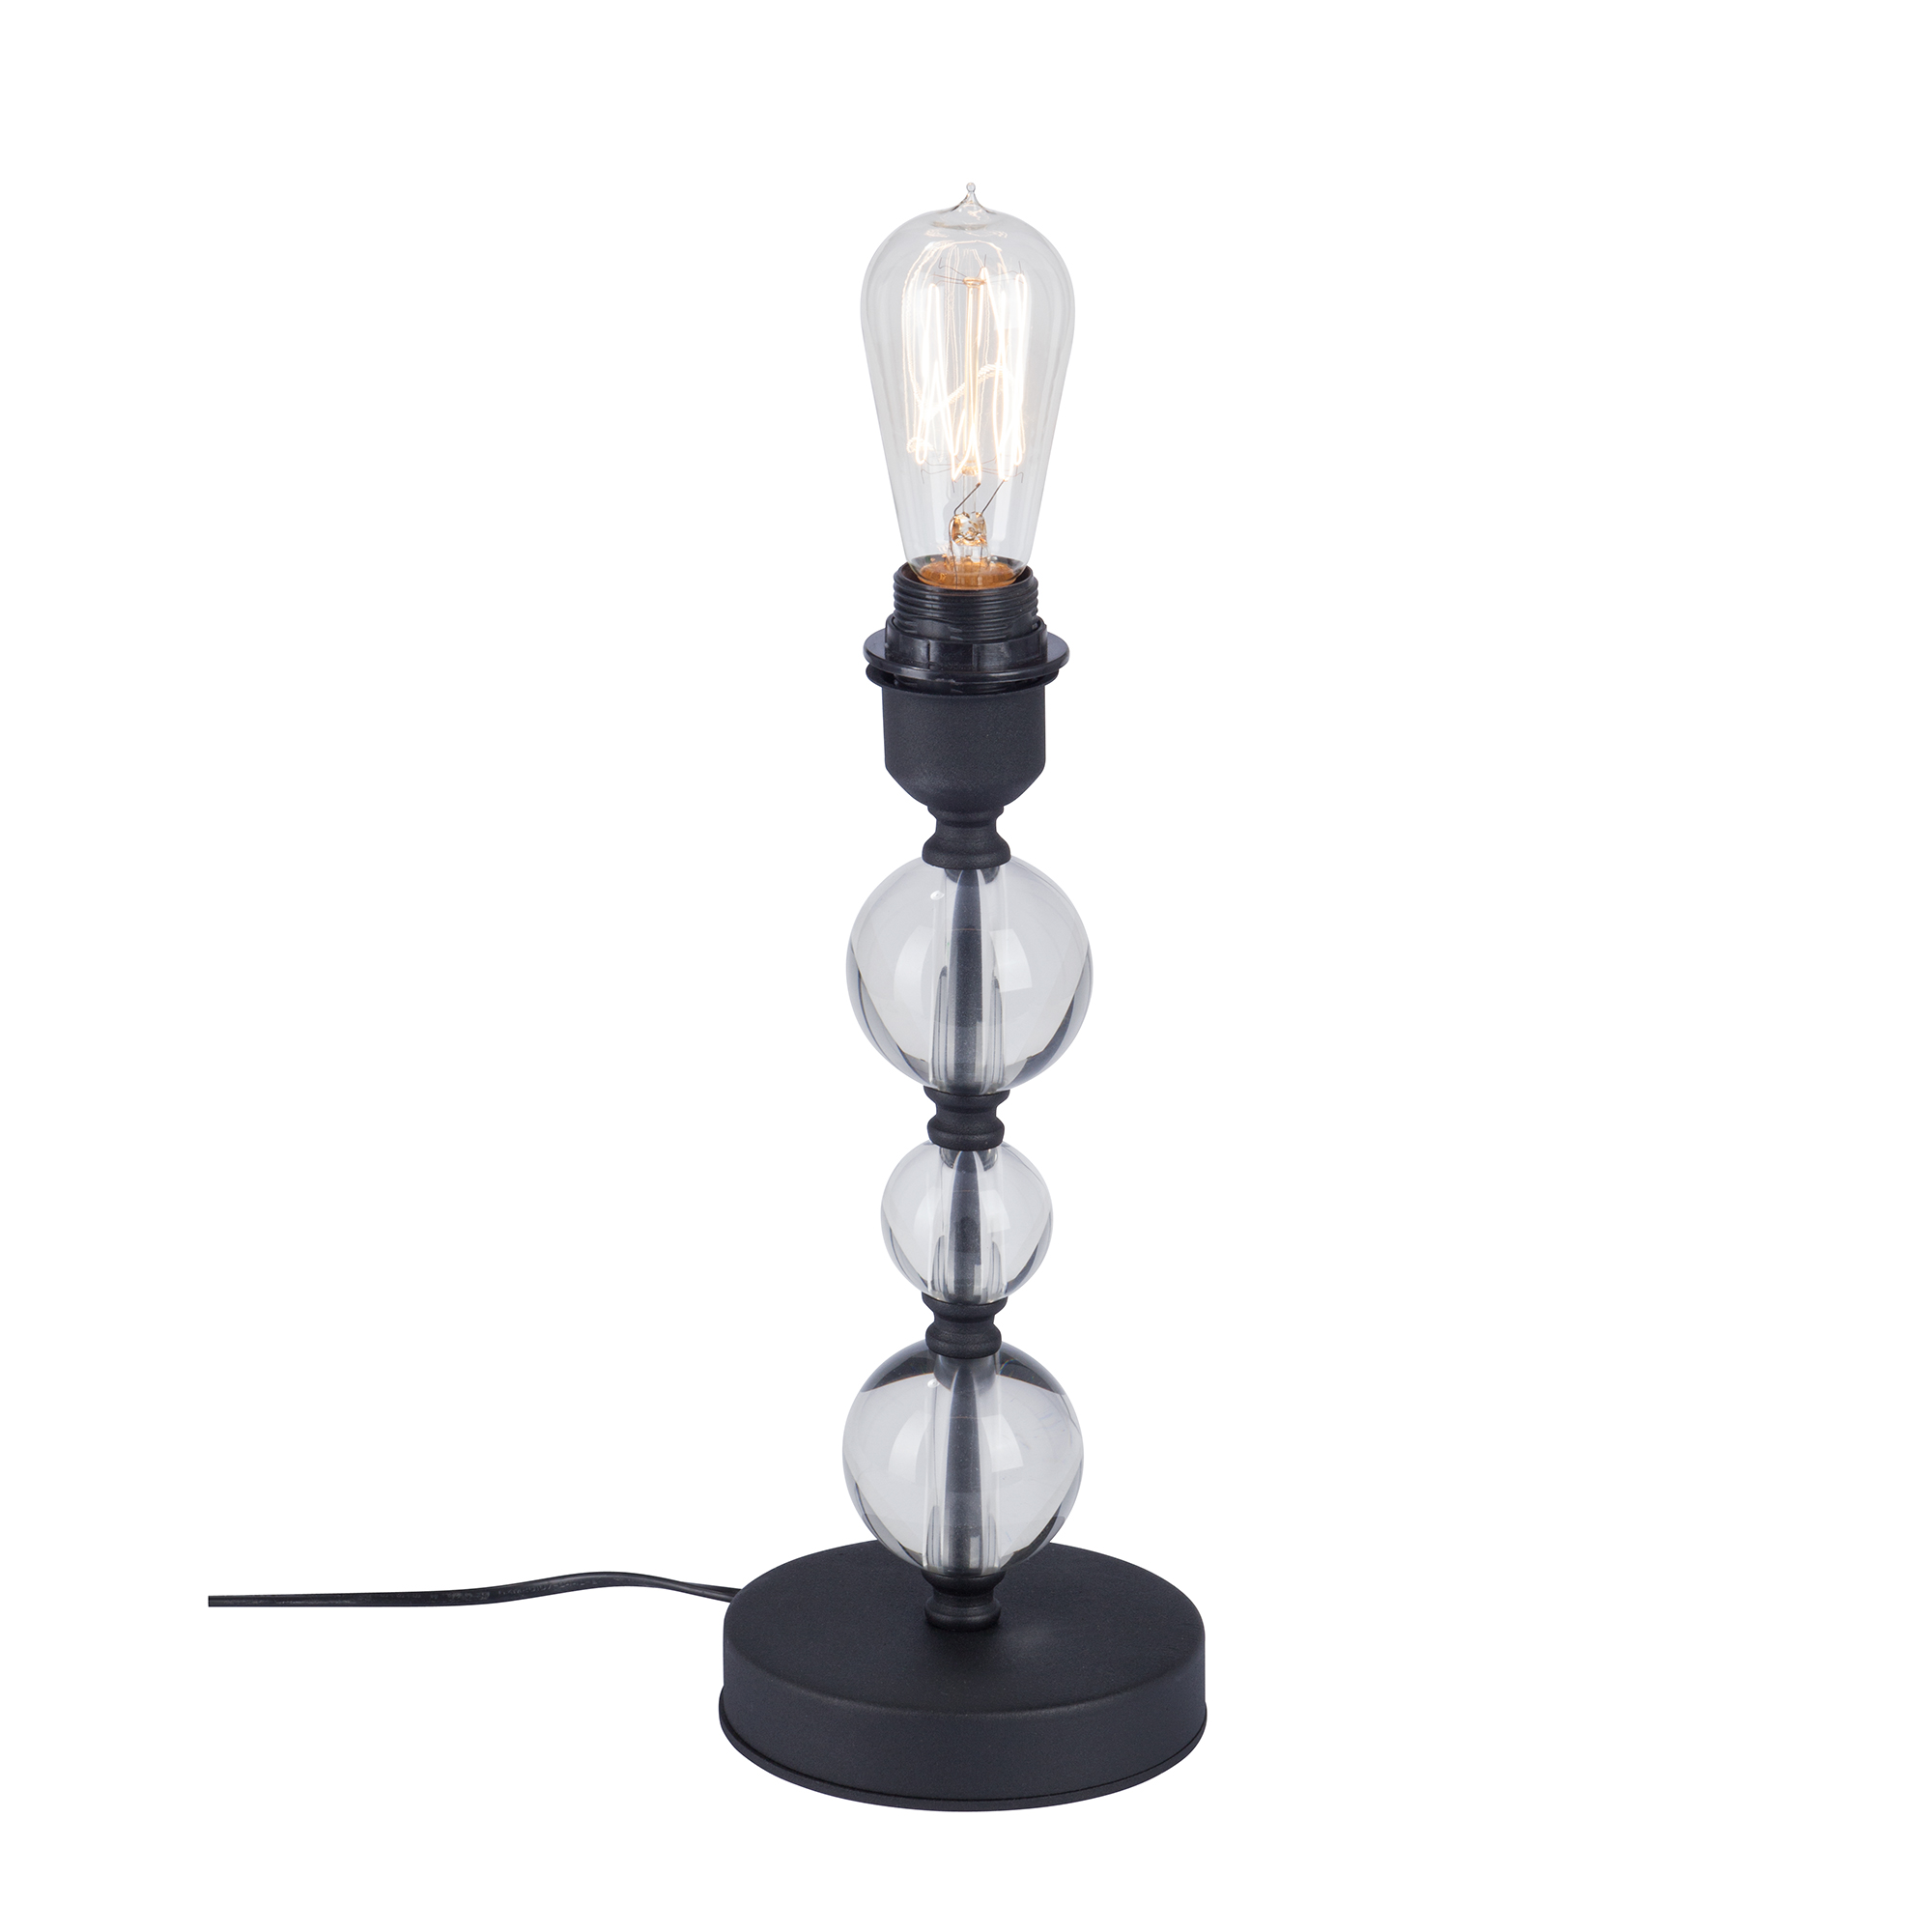 Декоративная настольная лампа Vitaluce V2938-1/1L, цвет черный;матовый V2938-1/1L - фото 1